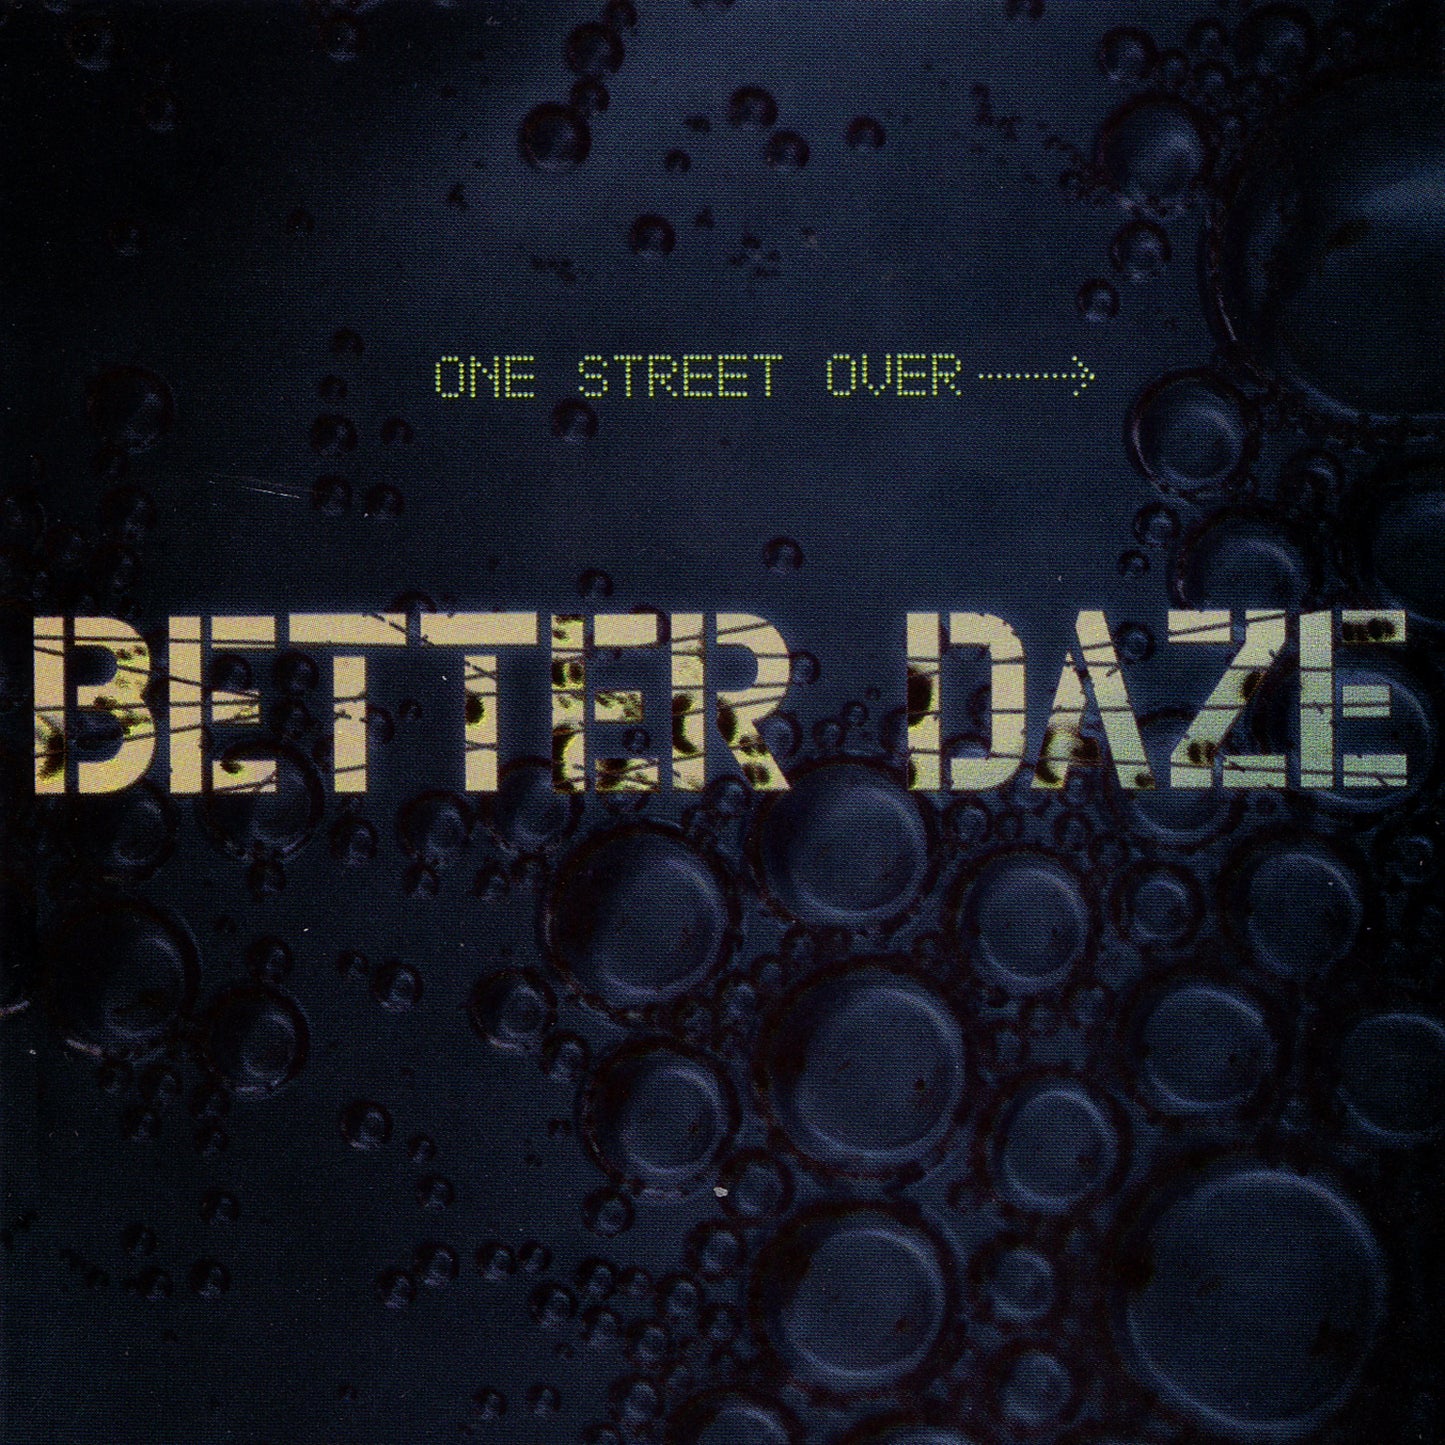 Better Daze "One Street Over" LP